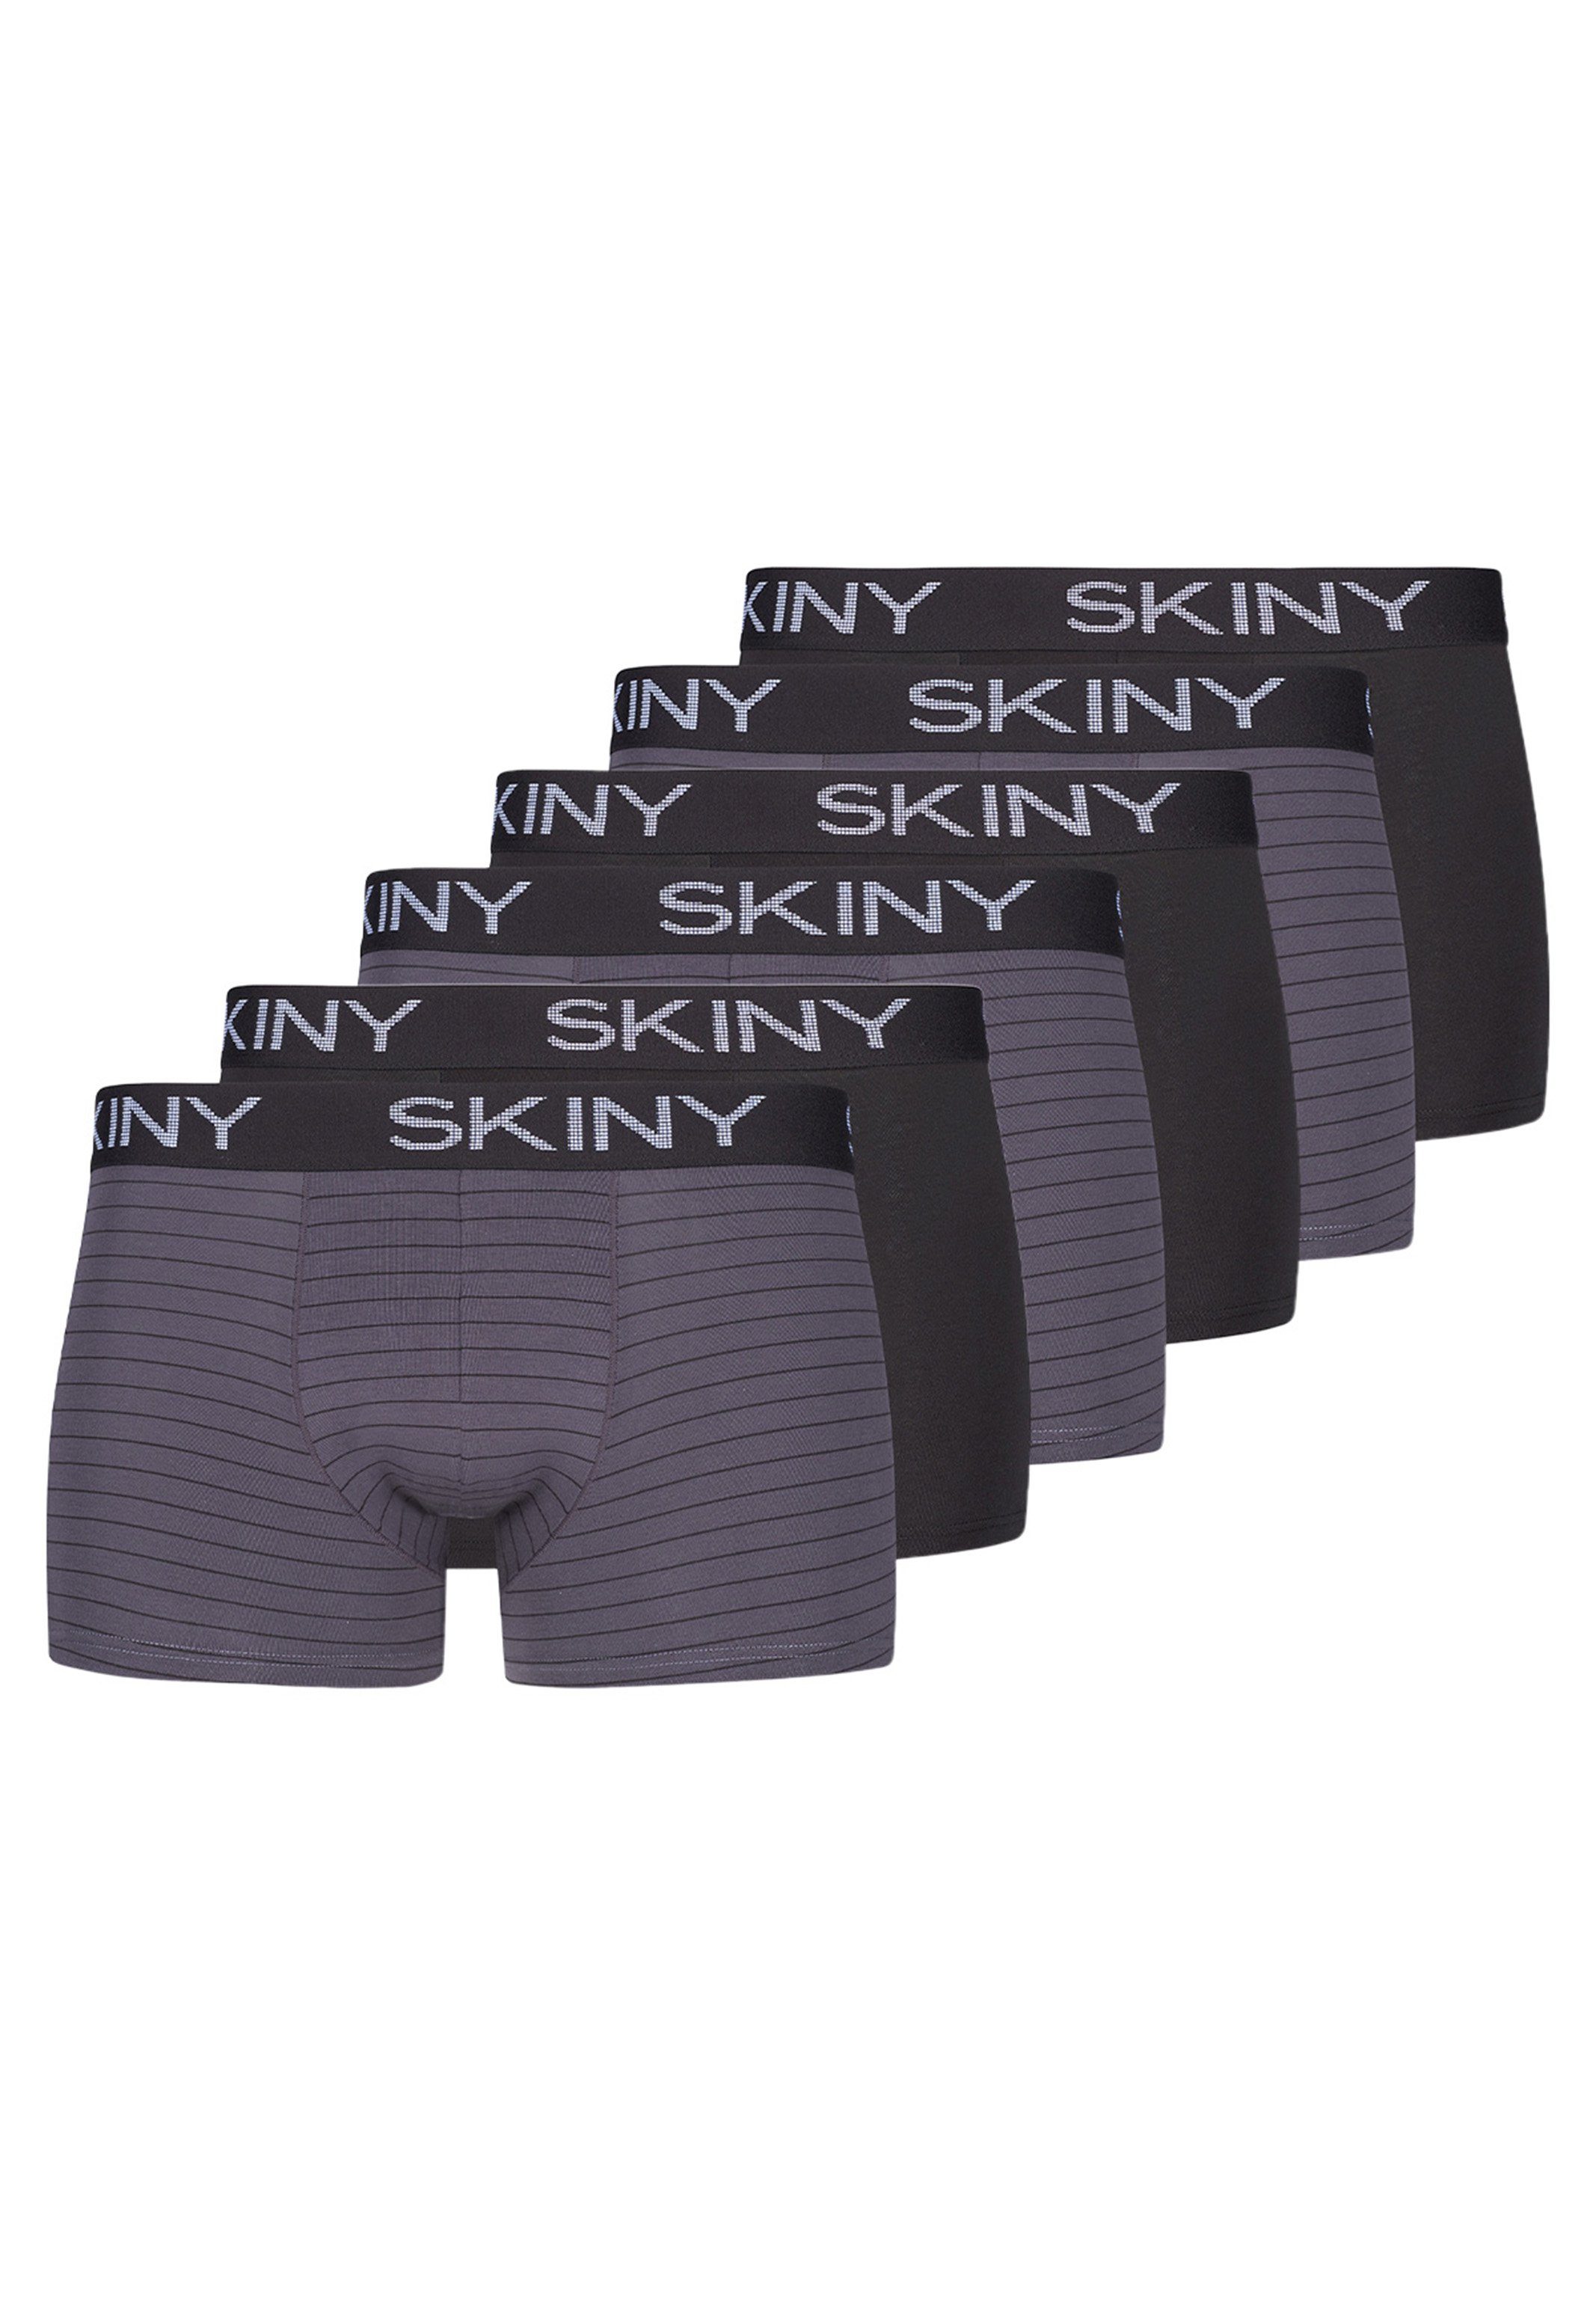 Skiny Retro Boxer 6er Pack Cotton (Spar-Set, 6-St) Retro Short / Pant - Baumwolle - Ohne Eingriff - Körpernaher Passform Anthracite Stripe Selection